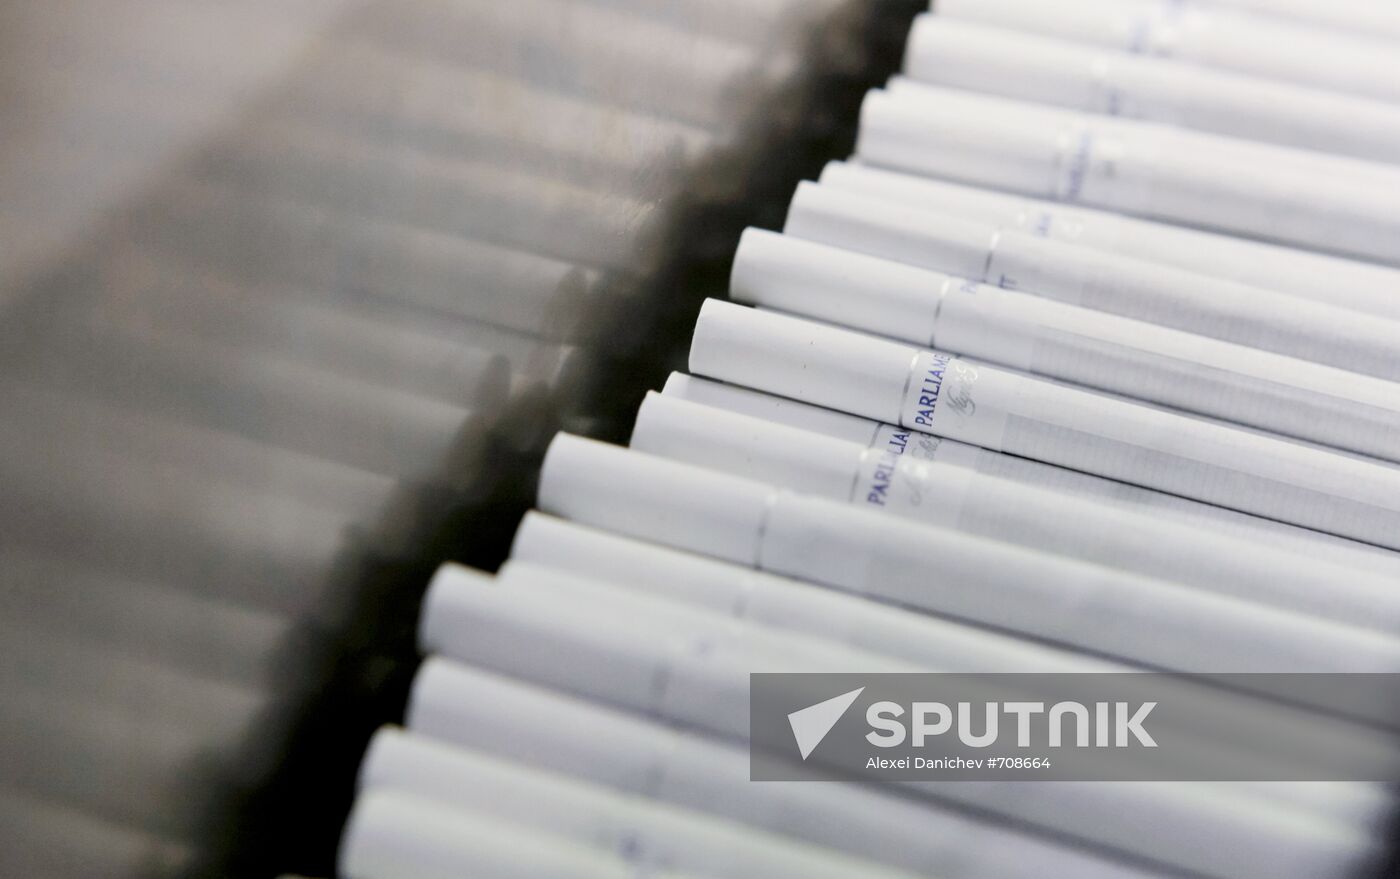 Production of "Parliament" cigarettes